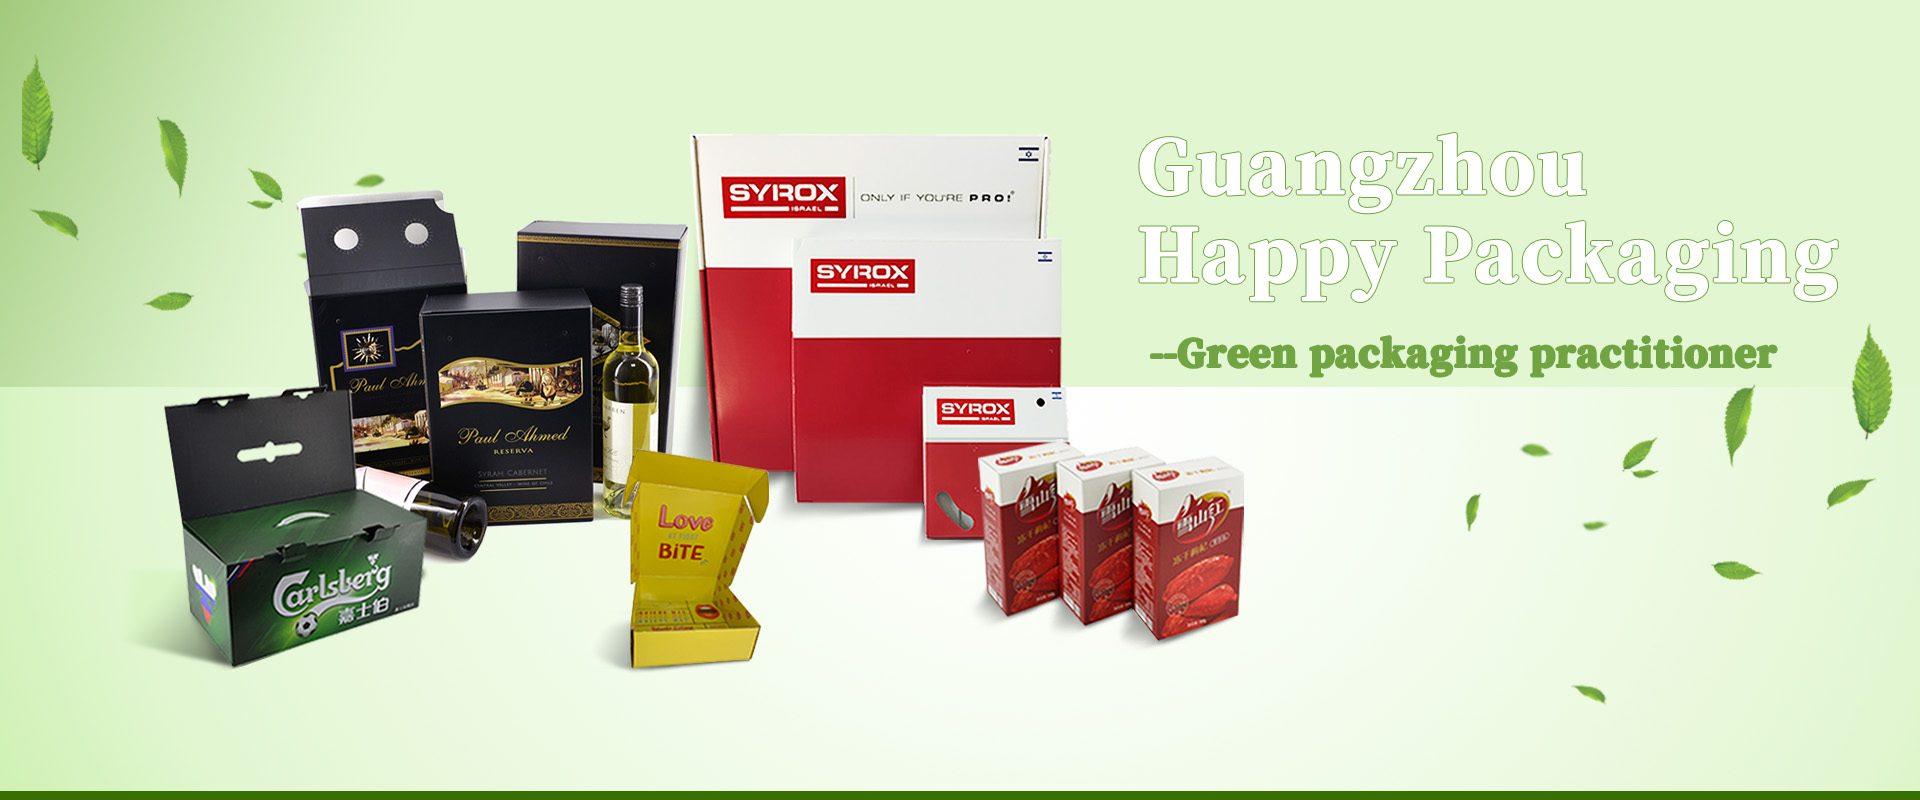 Guangzhou Happy Packaging - ผู้ปฏิบัติงานด้านบรรจุภัณฑ์สีเขียว